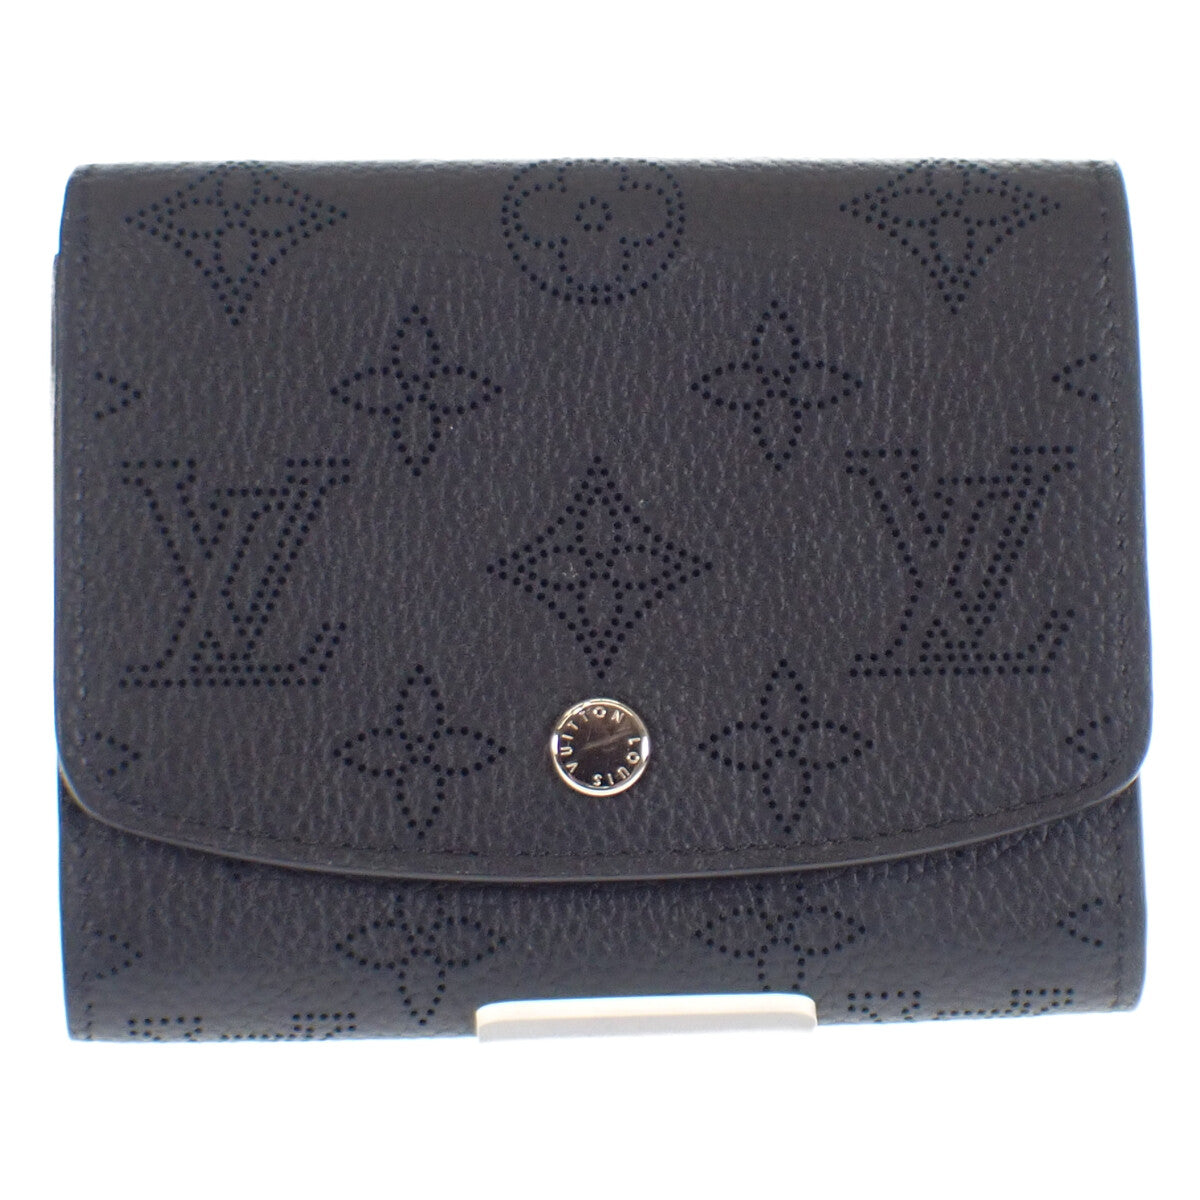 Louis Vuitton Iris Compact Wallet Leather Short Wallet M62540 in Excellent condition